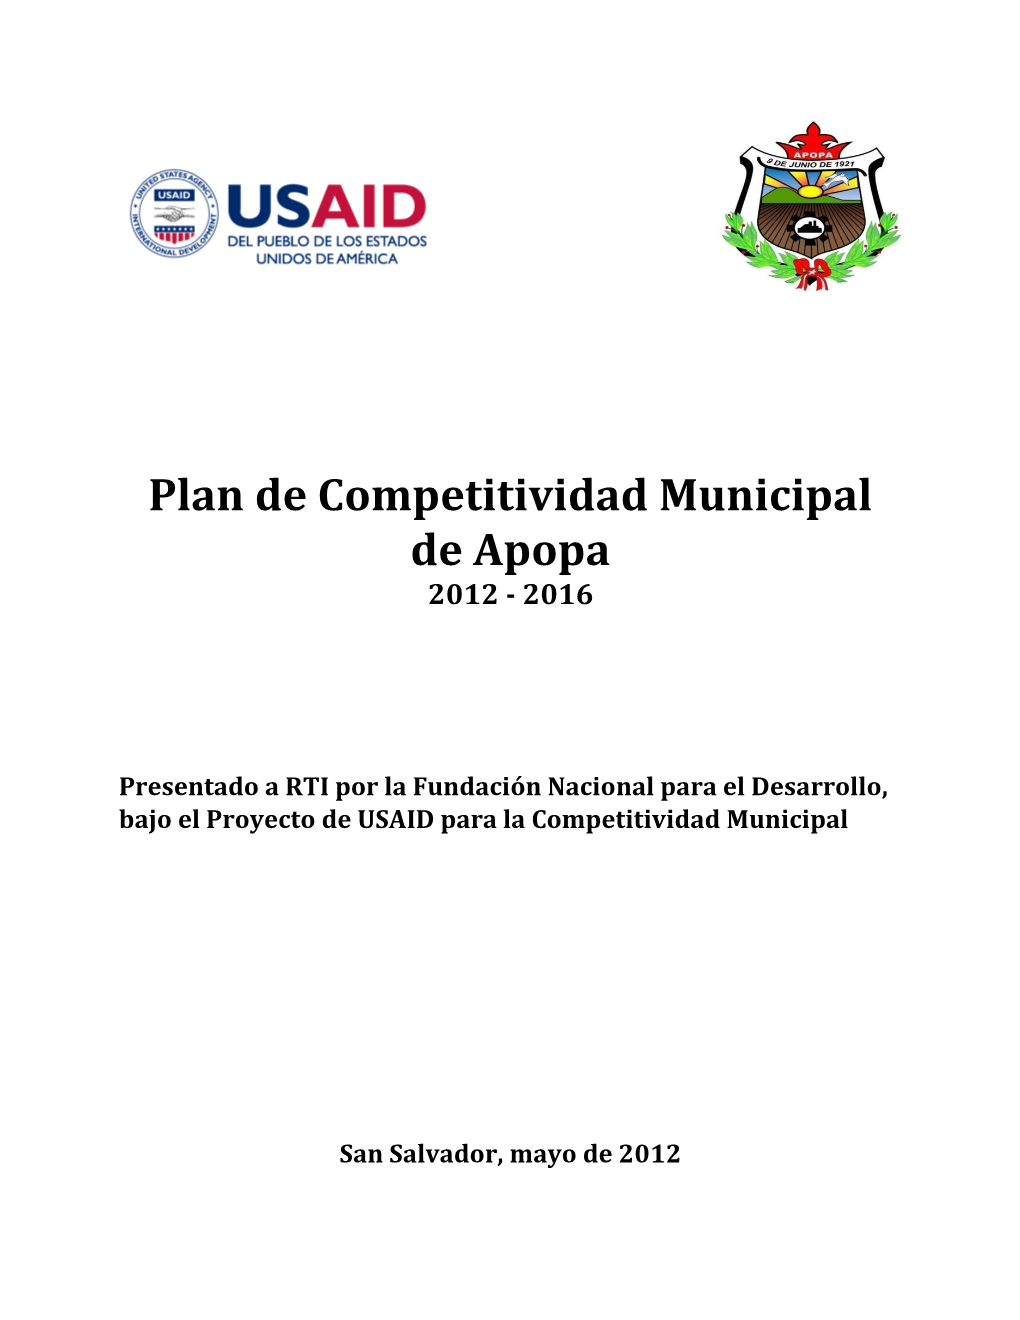 Plan De Competitividad Municipal De Apopa 2012 - 2016